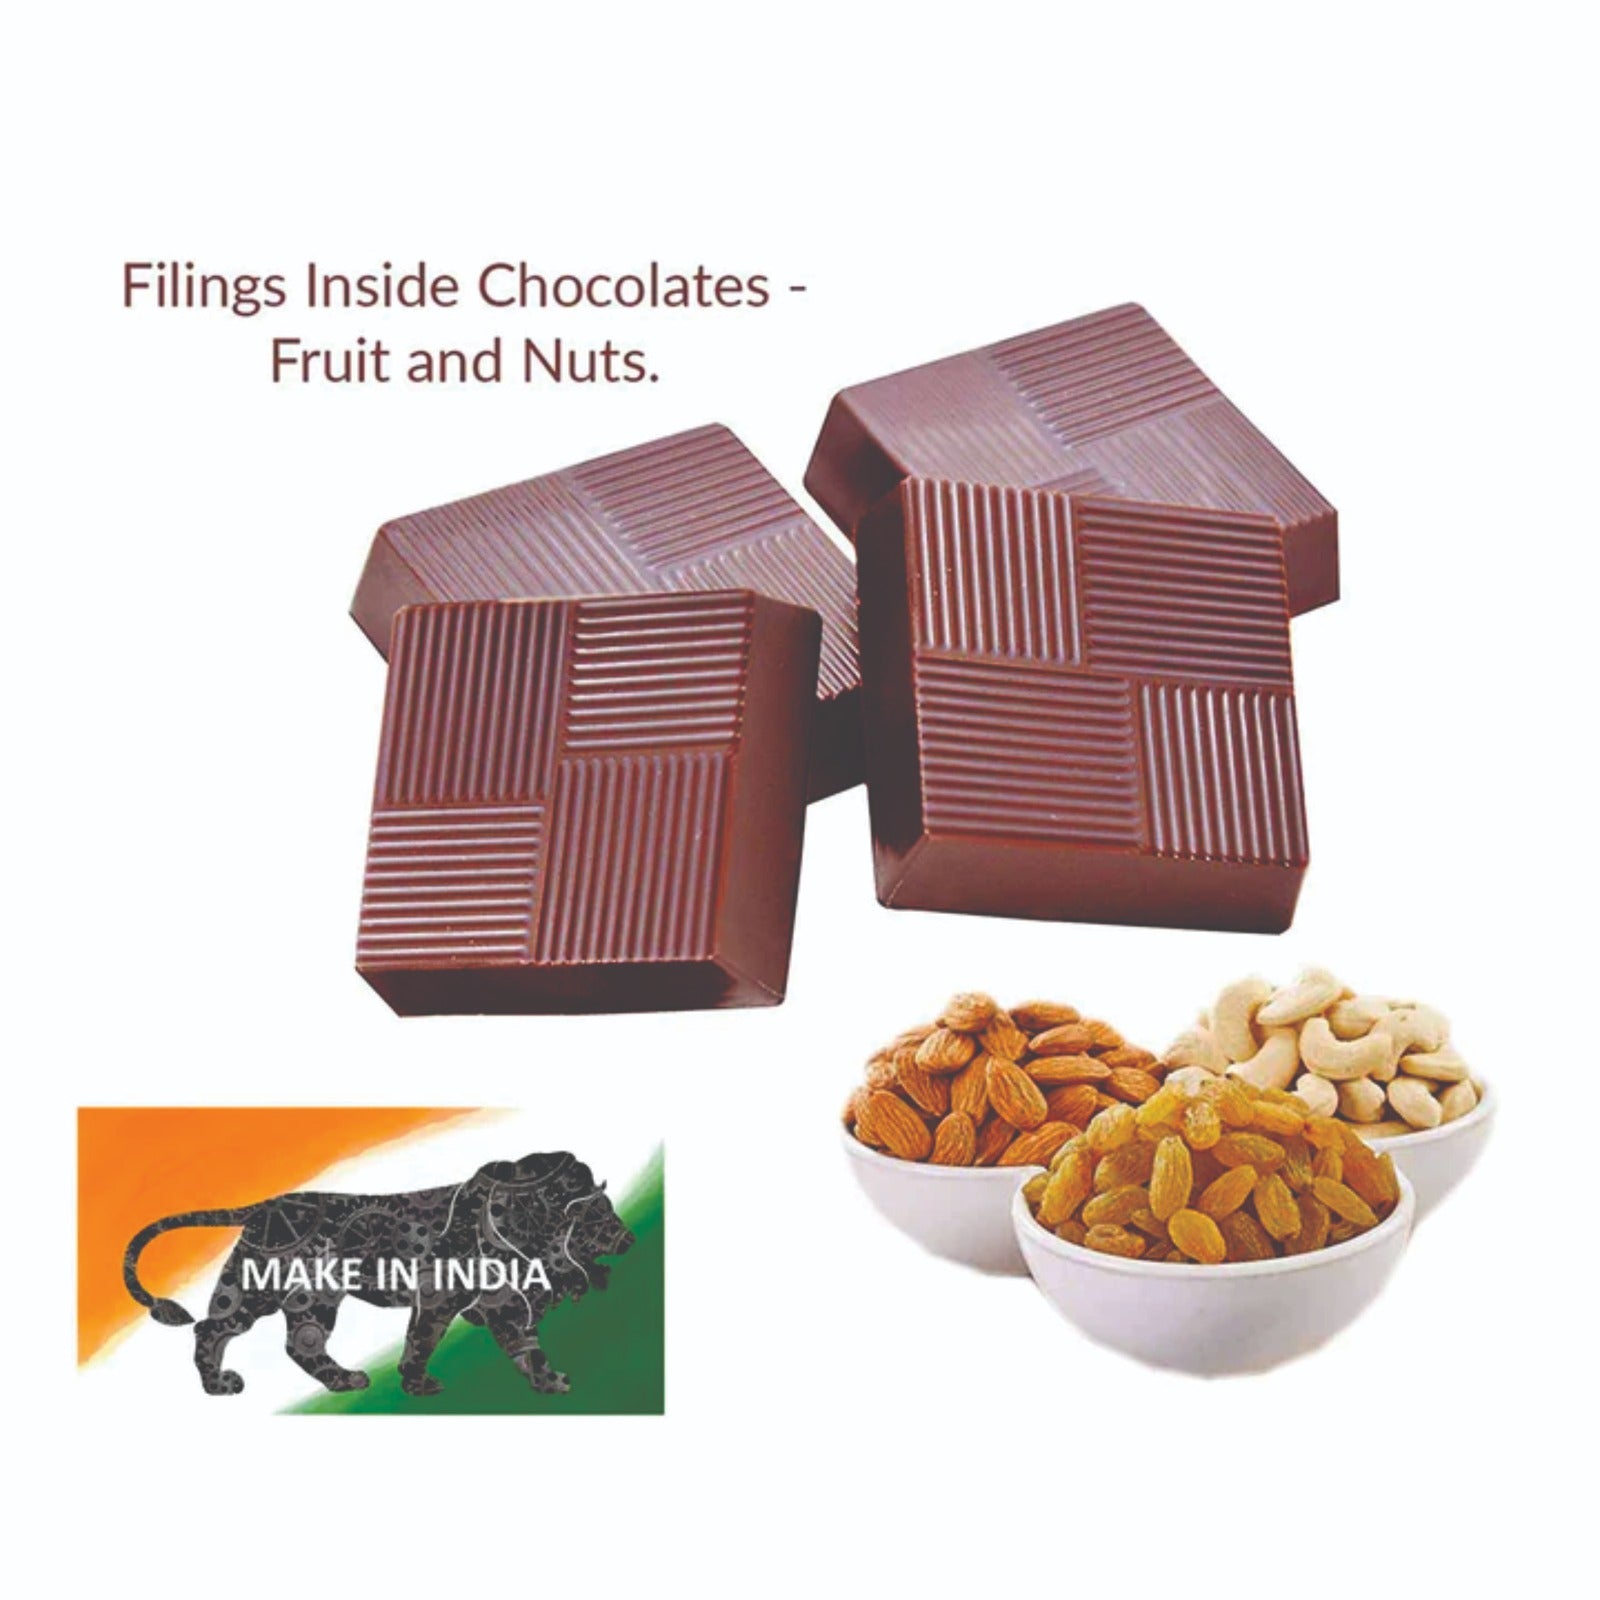 Buy unique wonderful chocolate gift box for brother on this Rakshabandhan